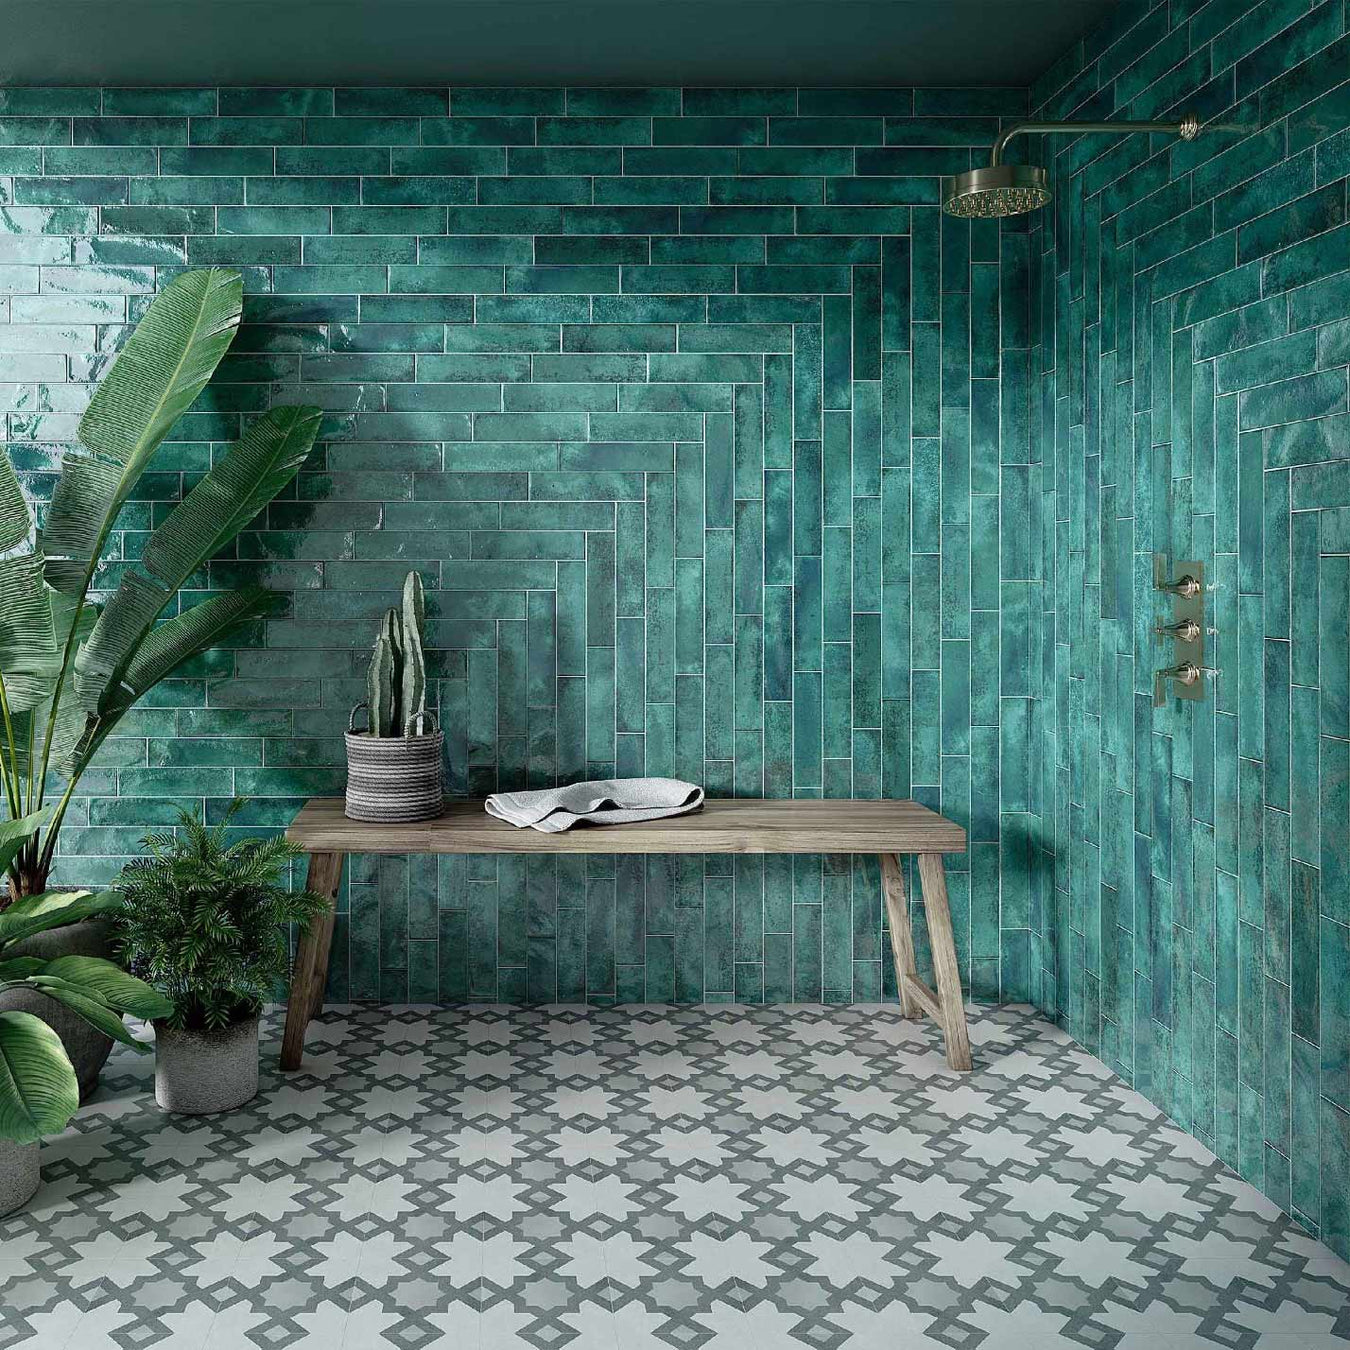 Green kitchen tiles